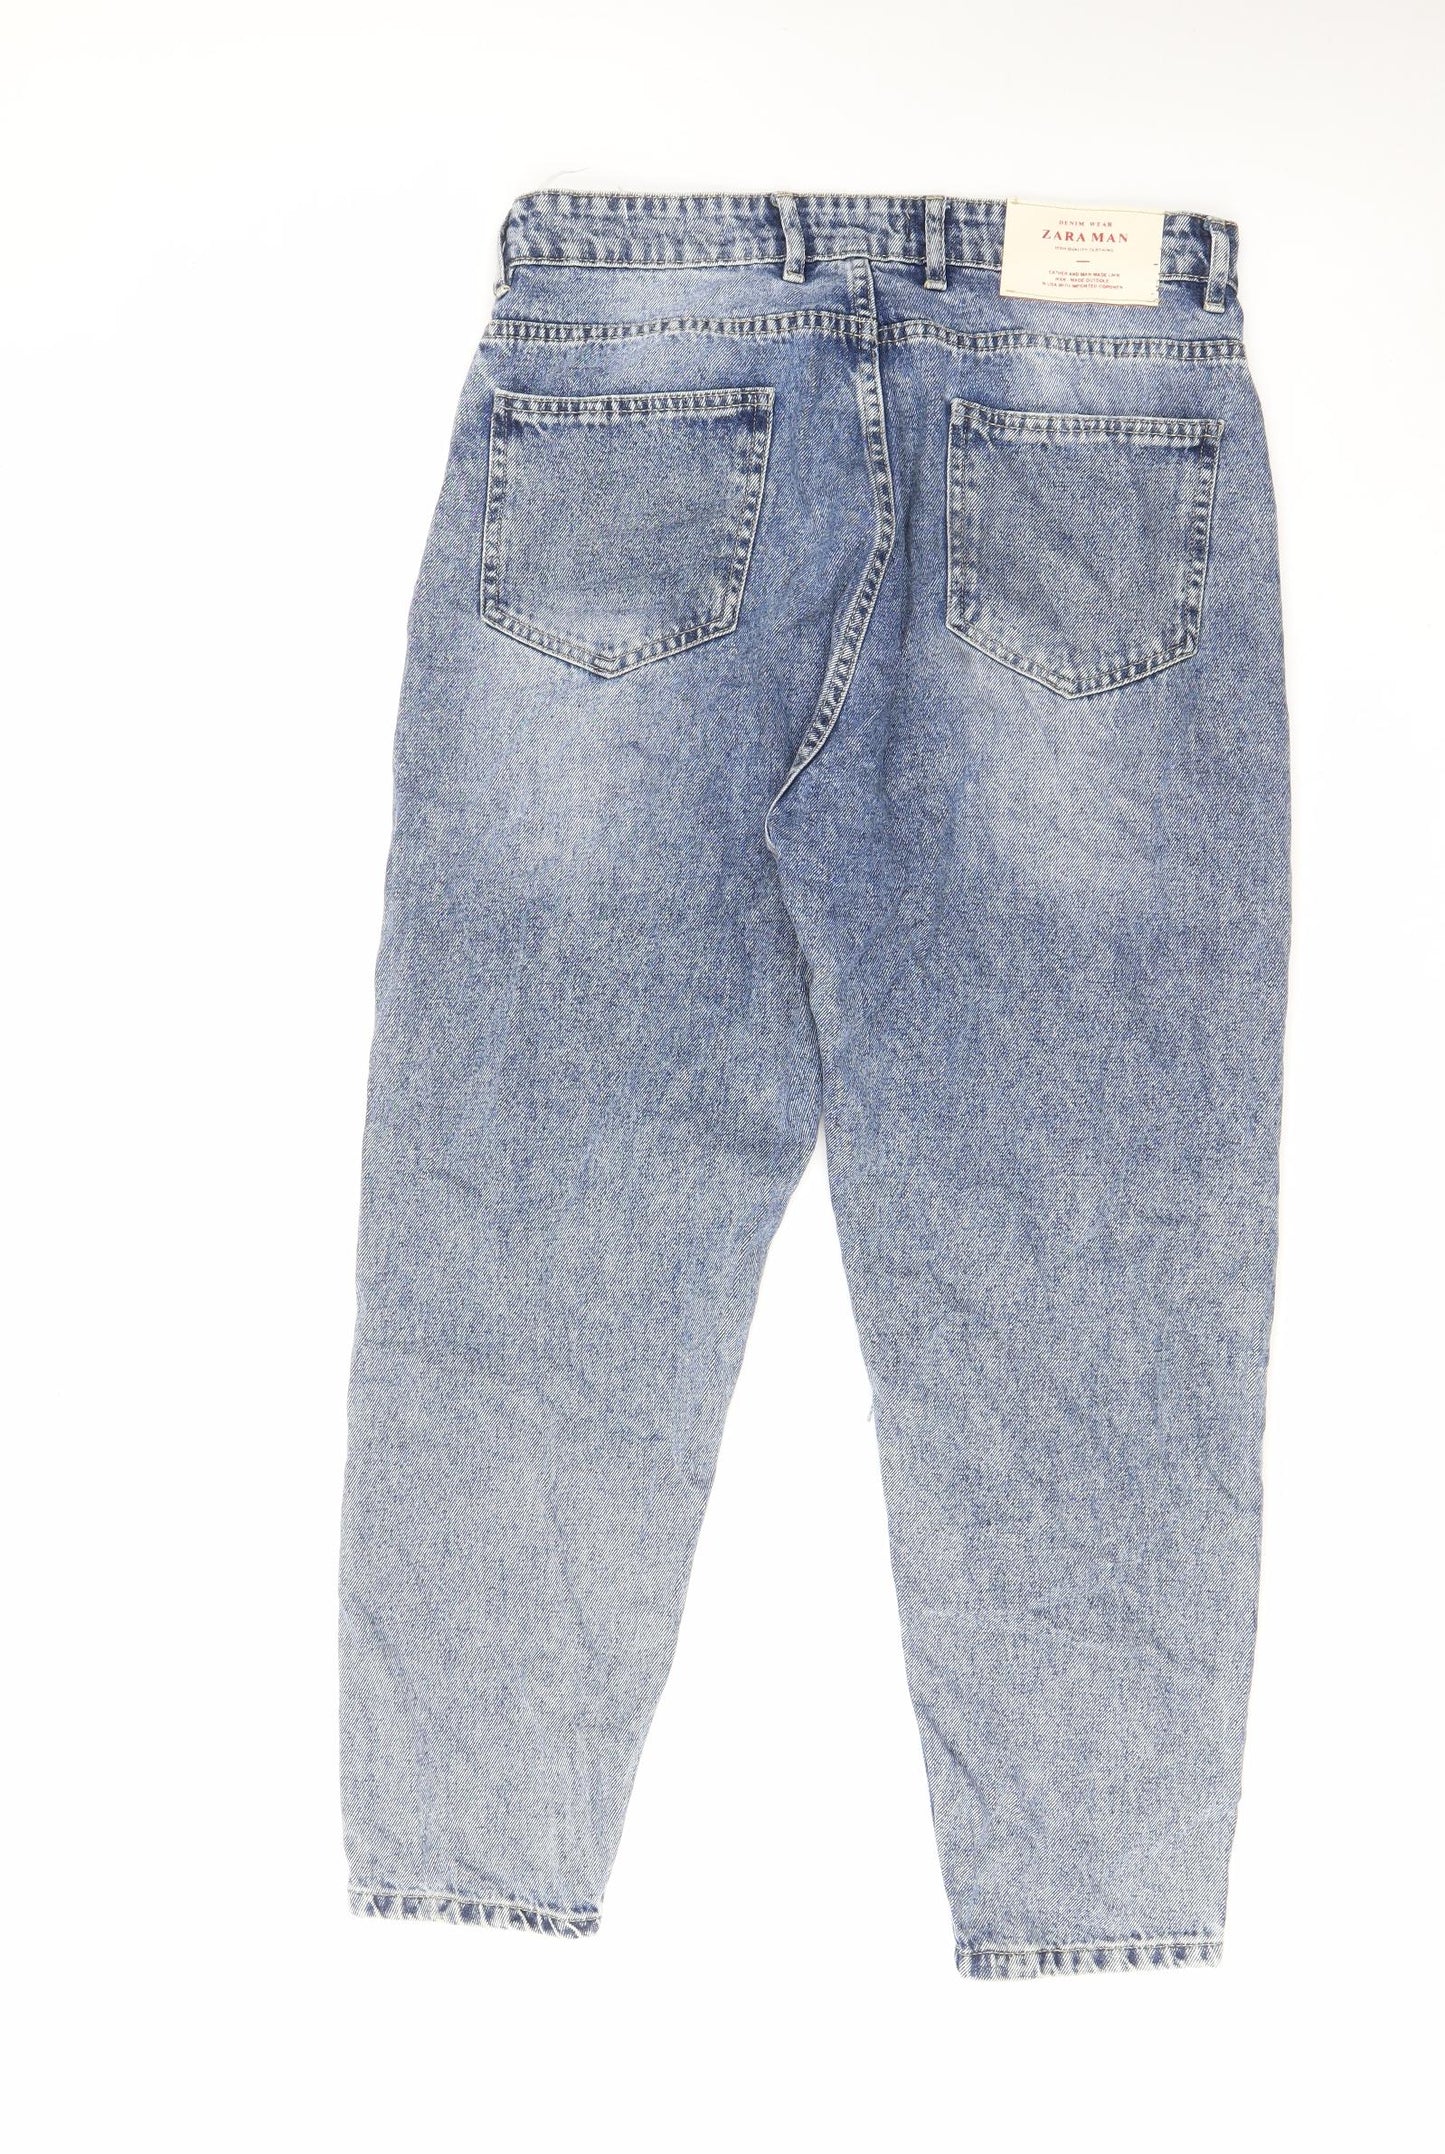 Zara Mens Blue Cotton Straight Jeans Size 32 in L28 in Regular Zip